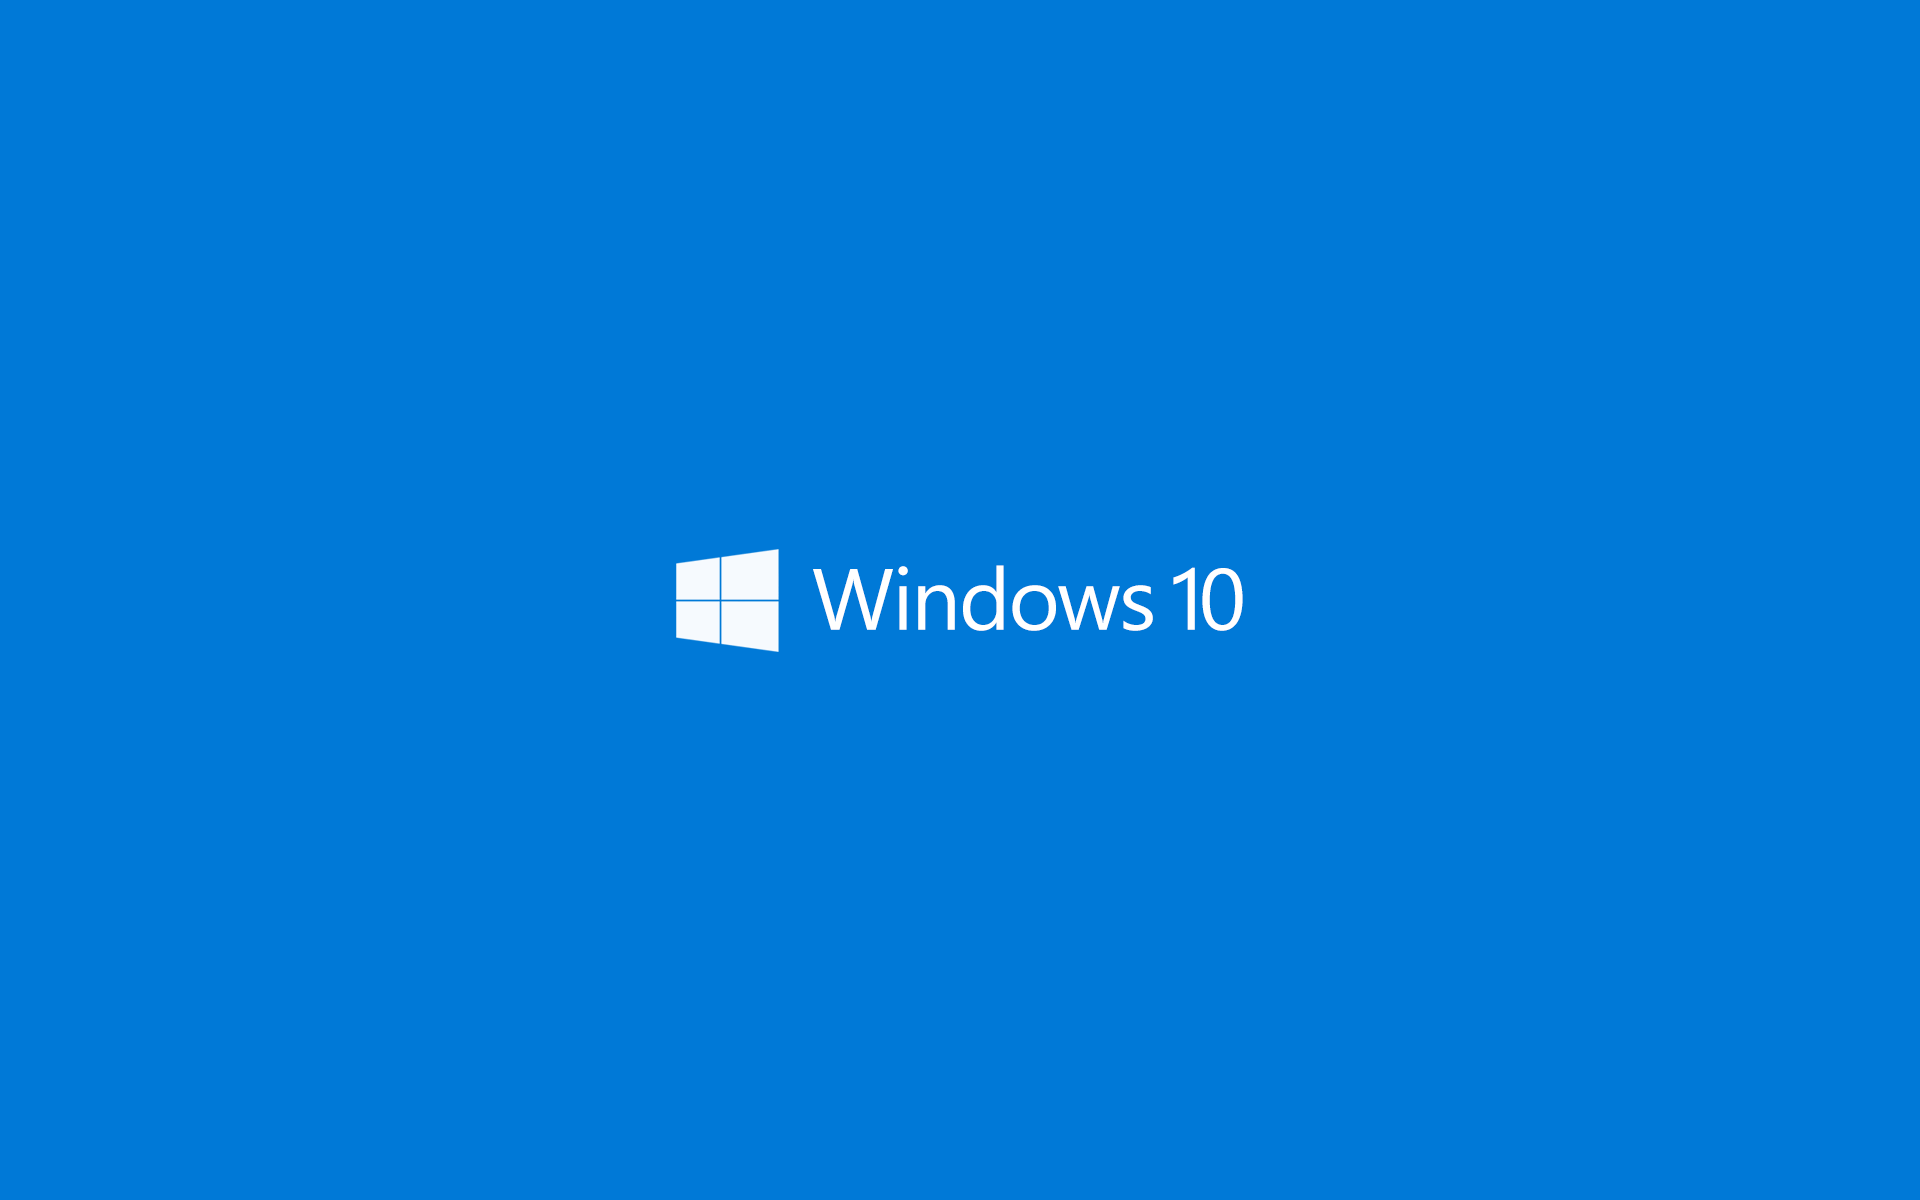 Windows Microsoft Windows, operating system, minimalism, logox1200 Wallpap. Microsoft windows, Windows 10 microsoft, Microsoft windows operating system